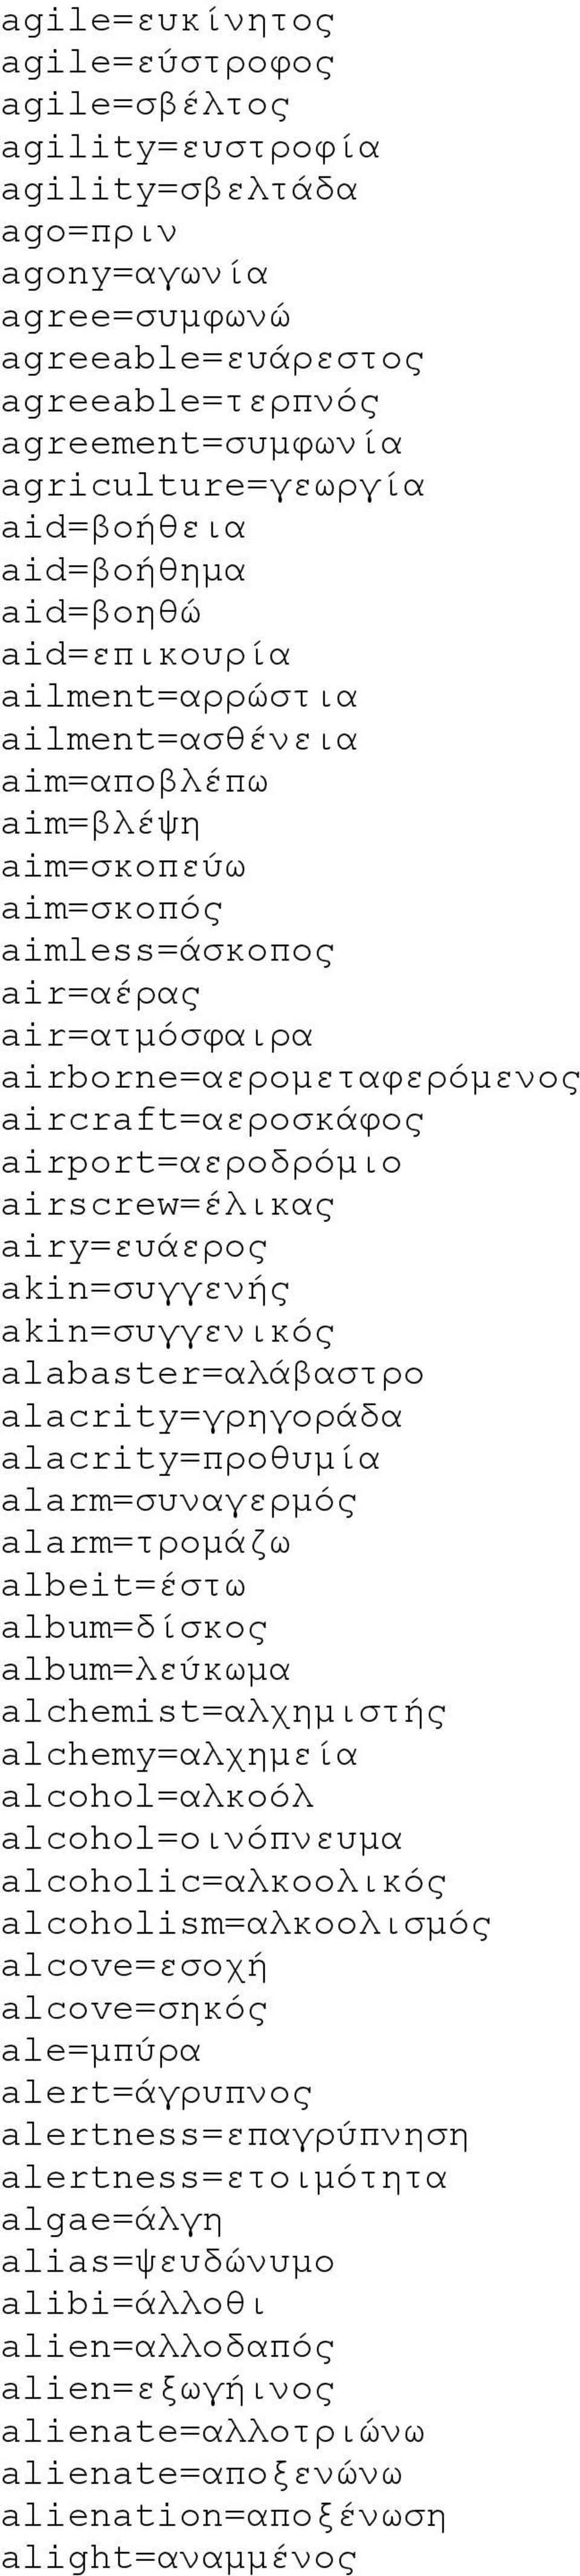 aircraft=αεροσκάφος airport=αεροδρόμιο airscrew=έλικας airy=ευάερος akin=συγγενής akin=συγγενικός alabaster=αλάβαστρο alacrity=γρηγοράδα alacrity=προθυμία alarm=συναγερμός alarm=τρομάζω albeit=έστω